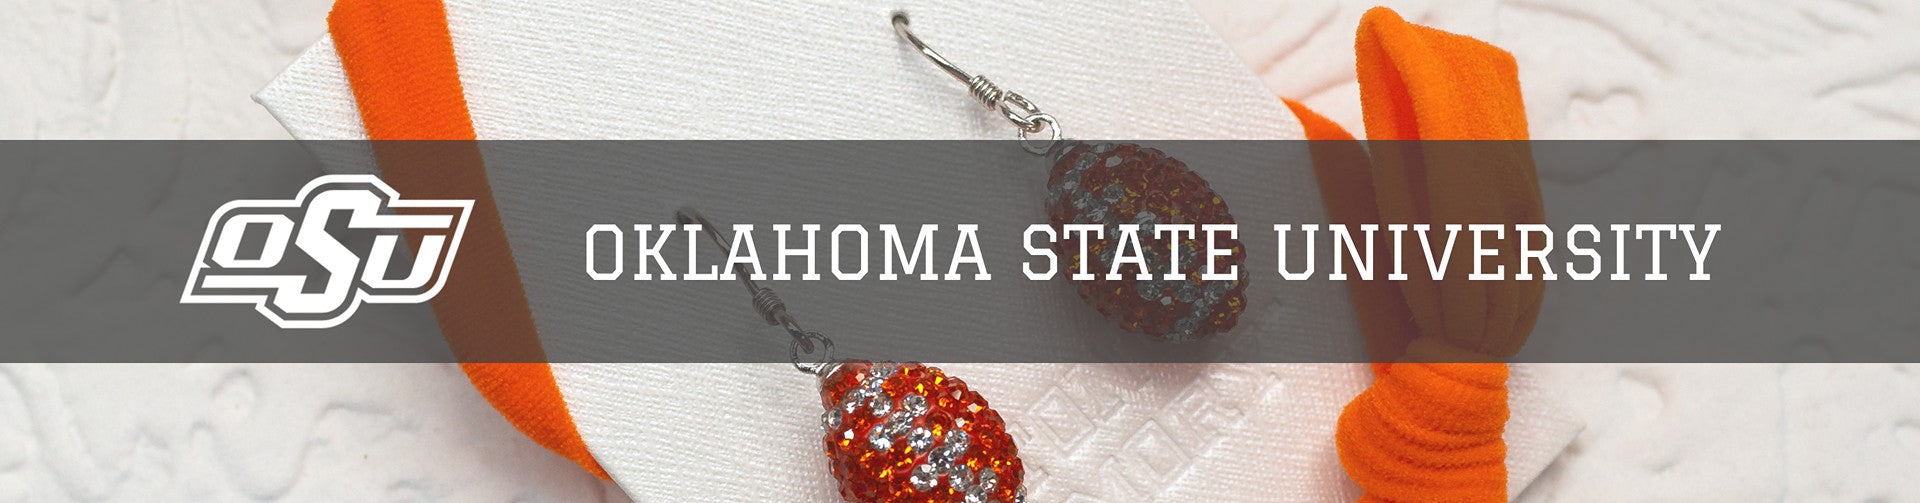 Oklahoma State Cowboys